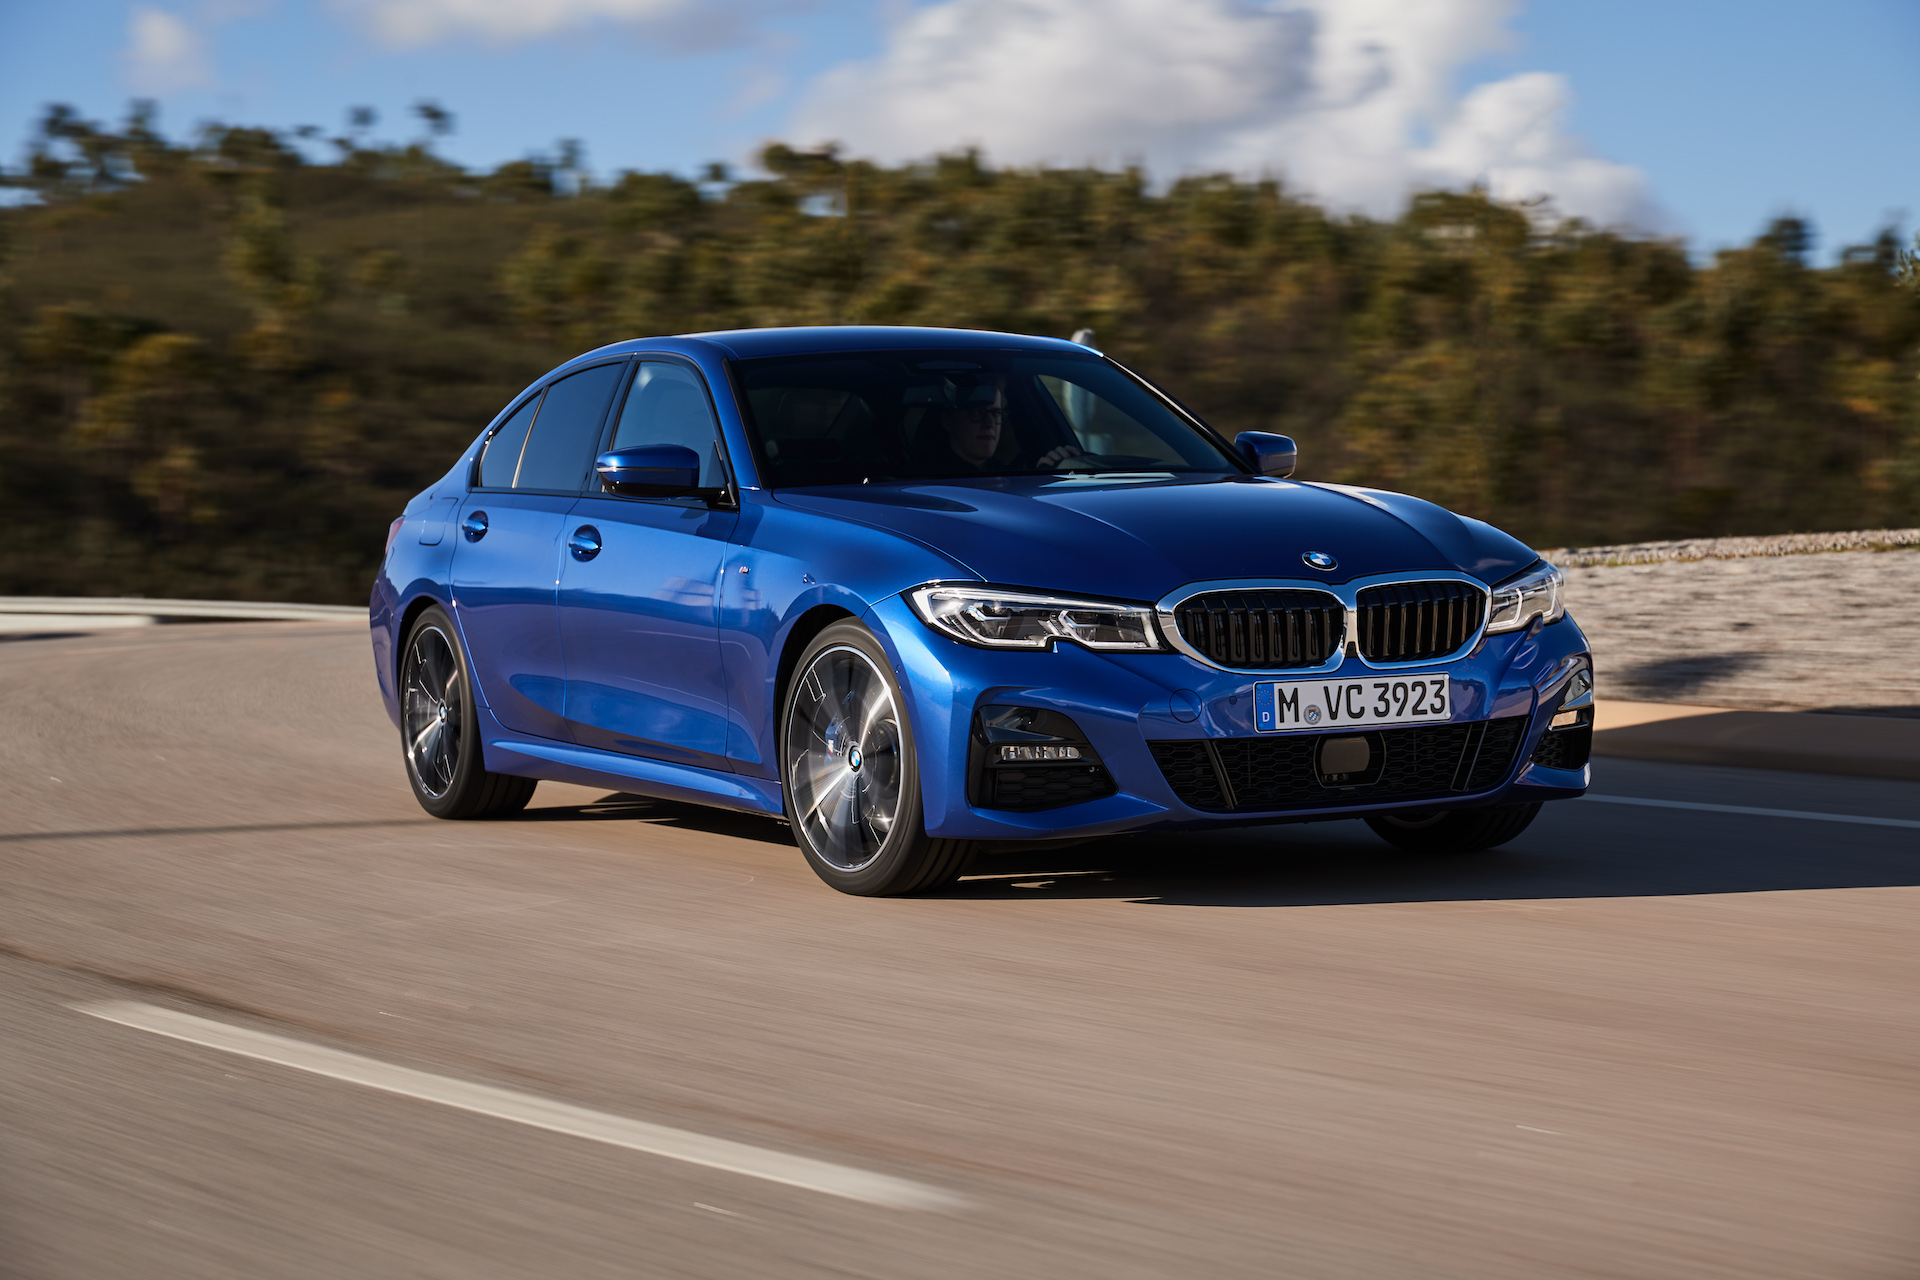 2020 BMW M340i will set buyers back 54,995